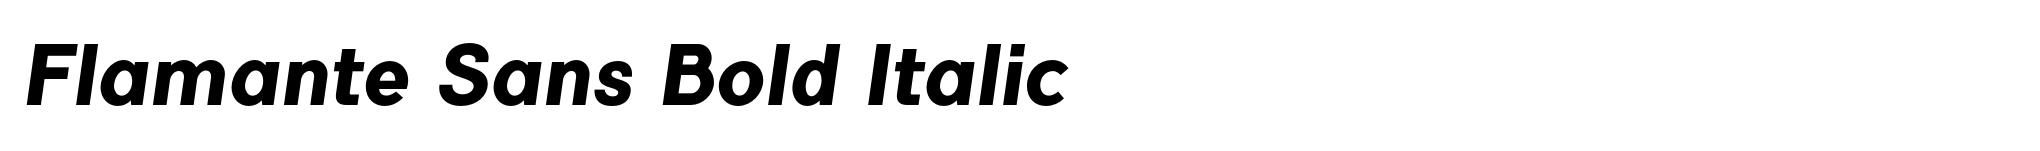 Flamante Sans Bold Italic image